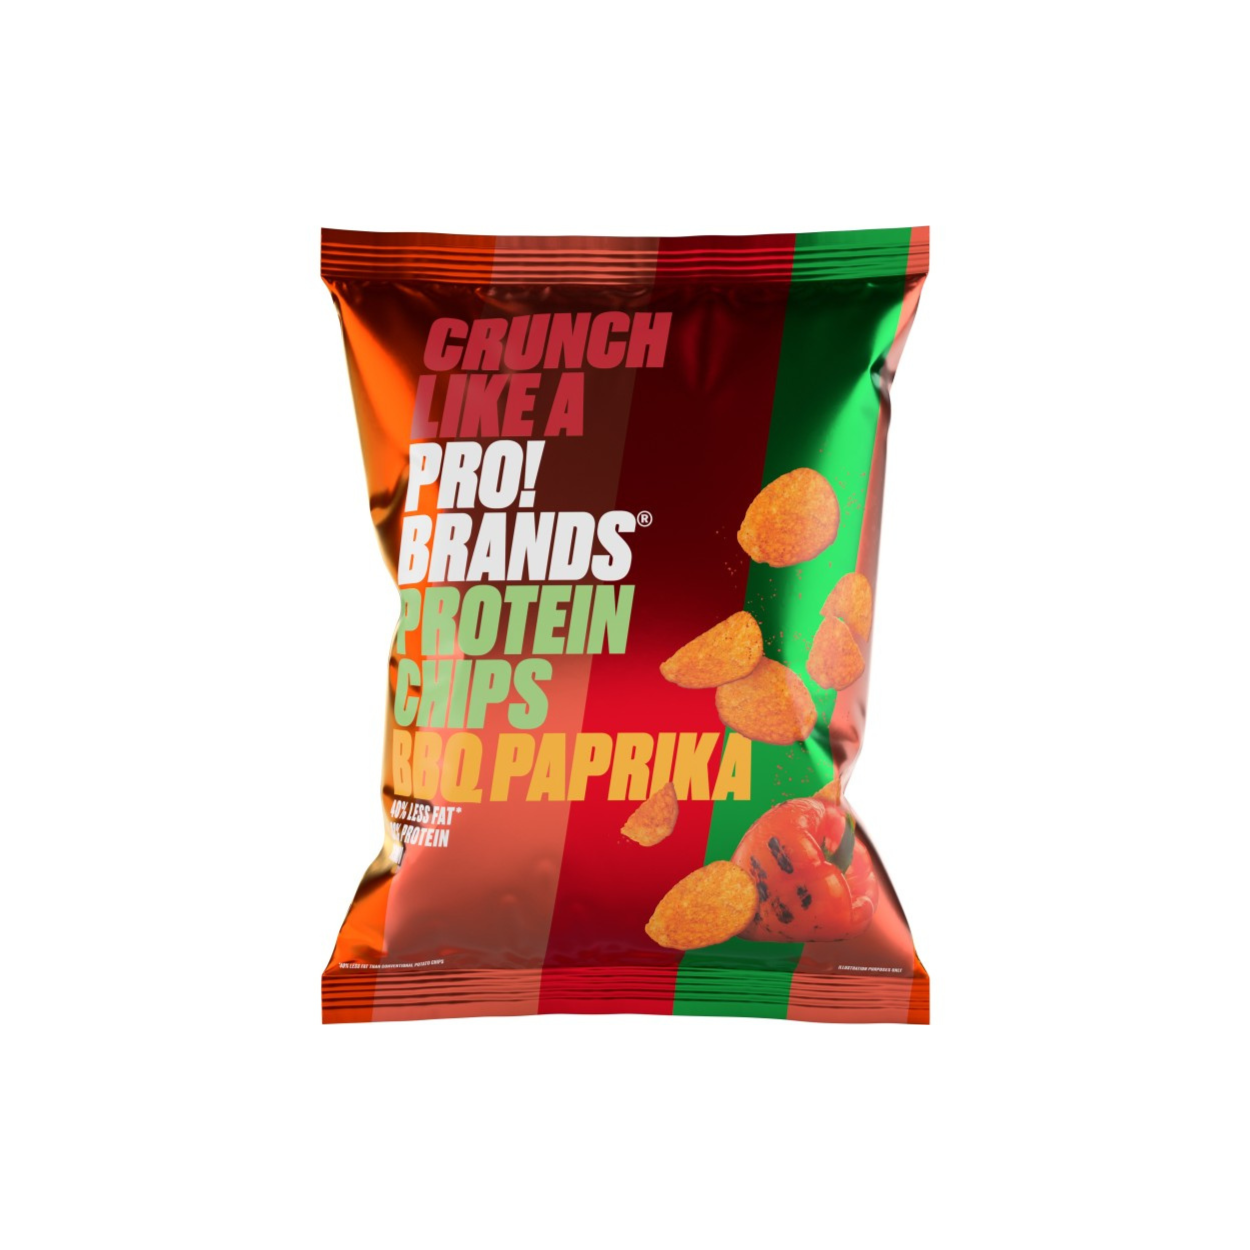 Probrands Protein Chips BBQ Paprika (1-14x50g)